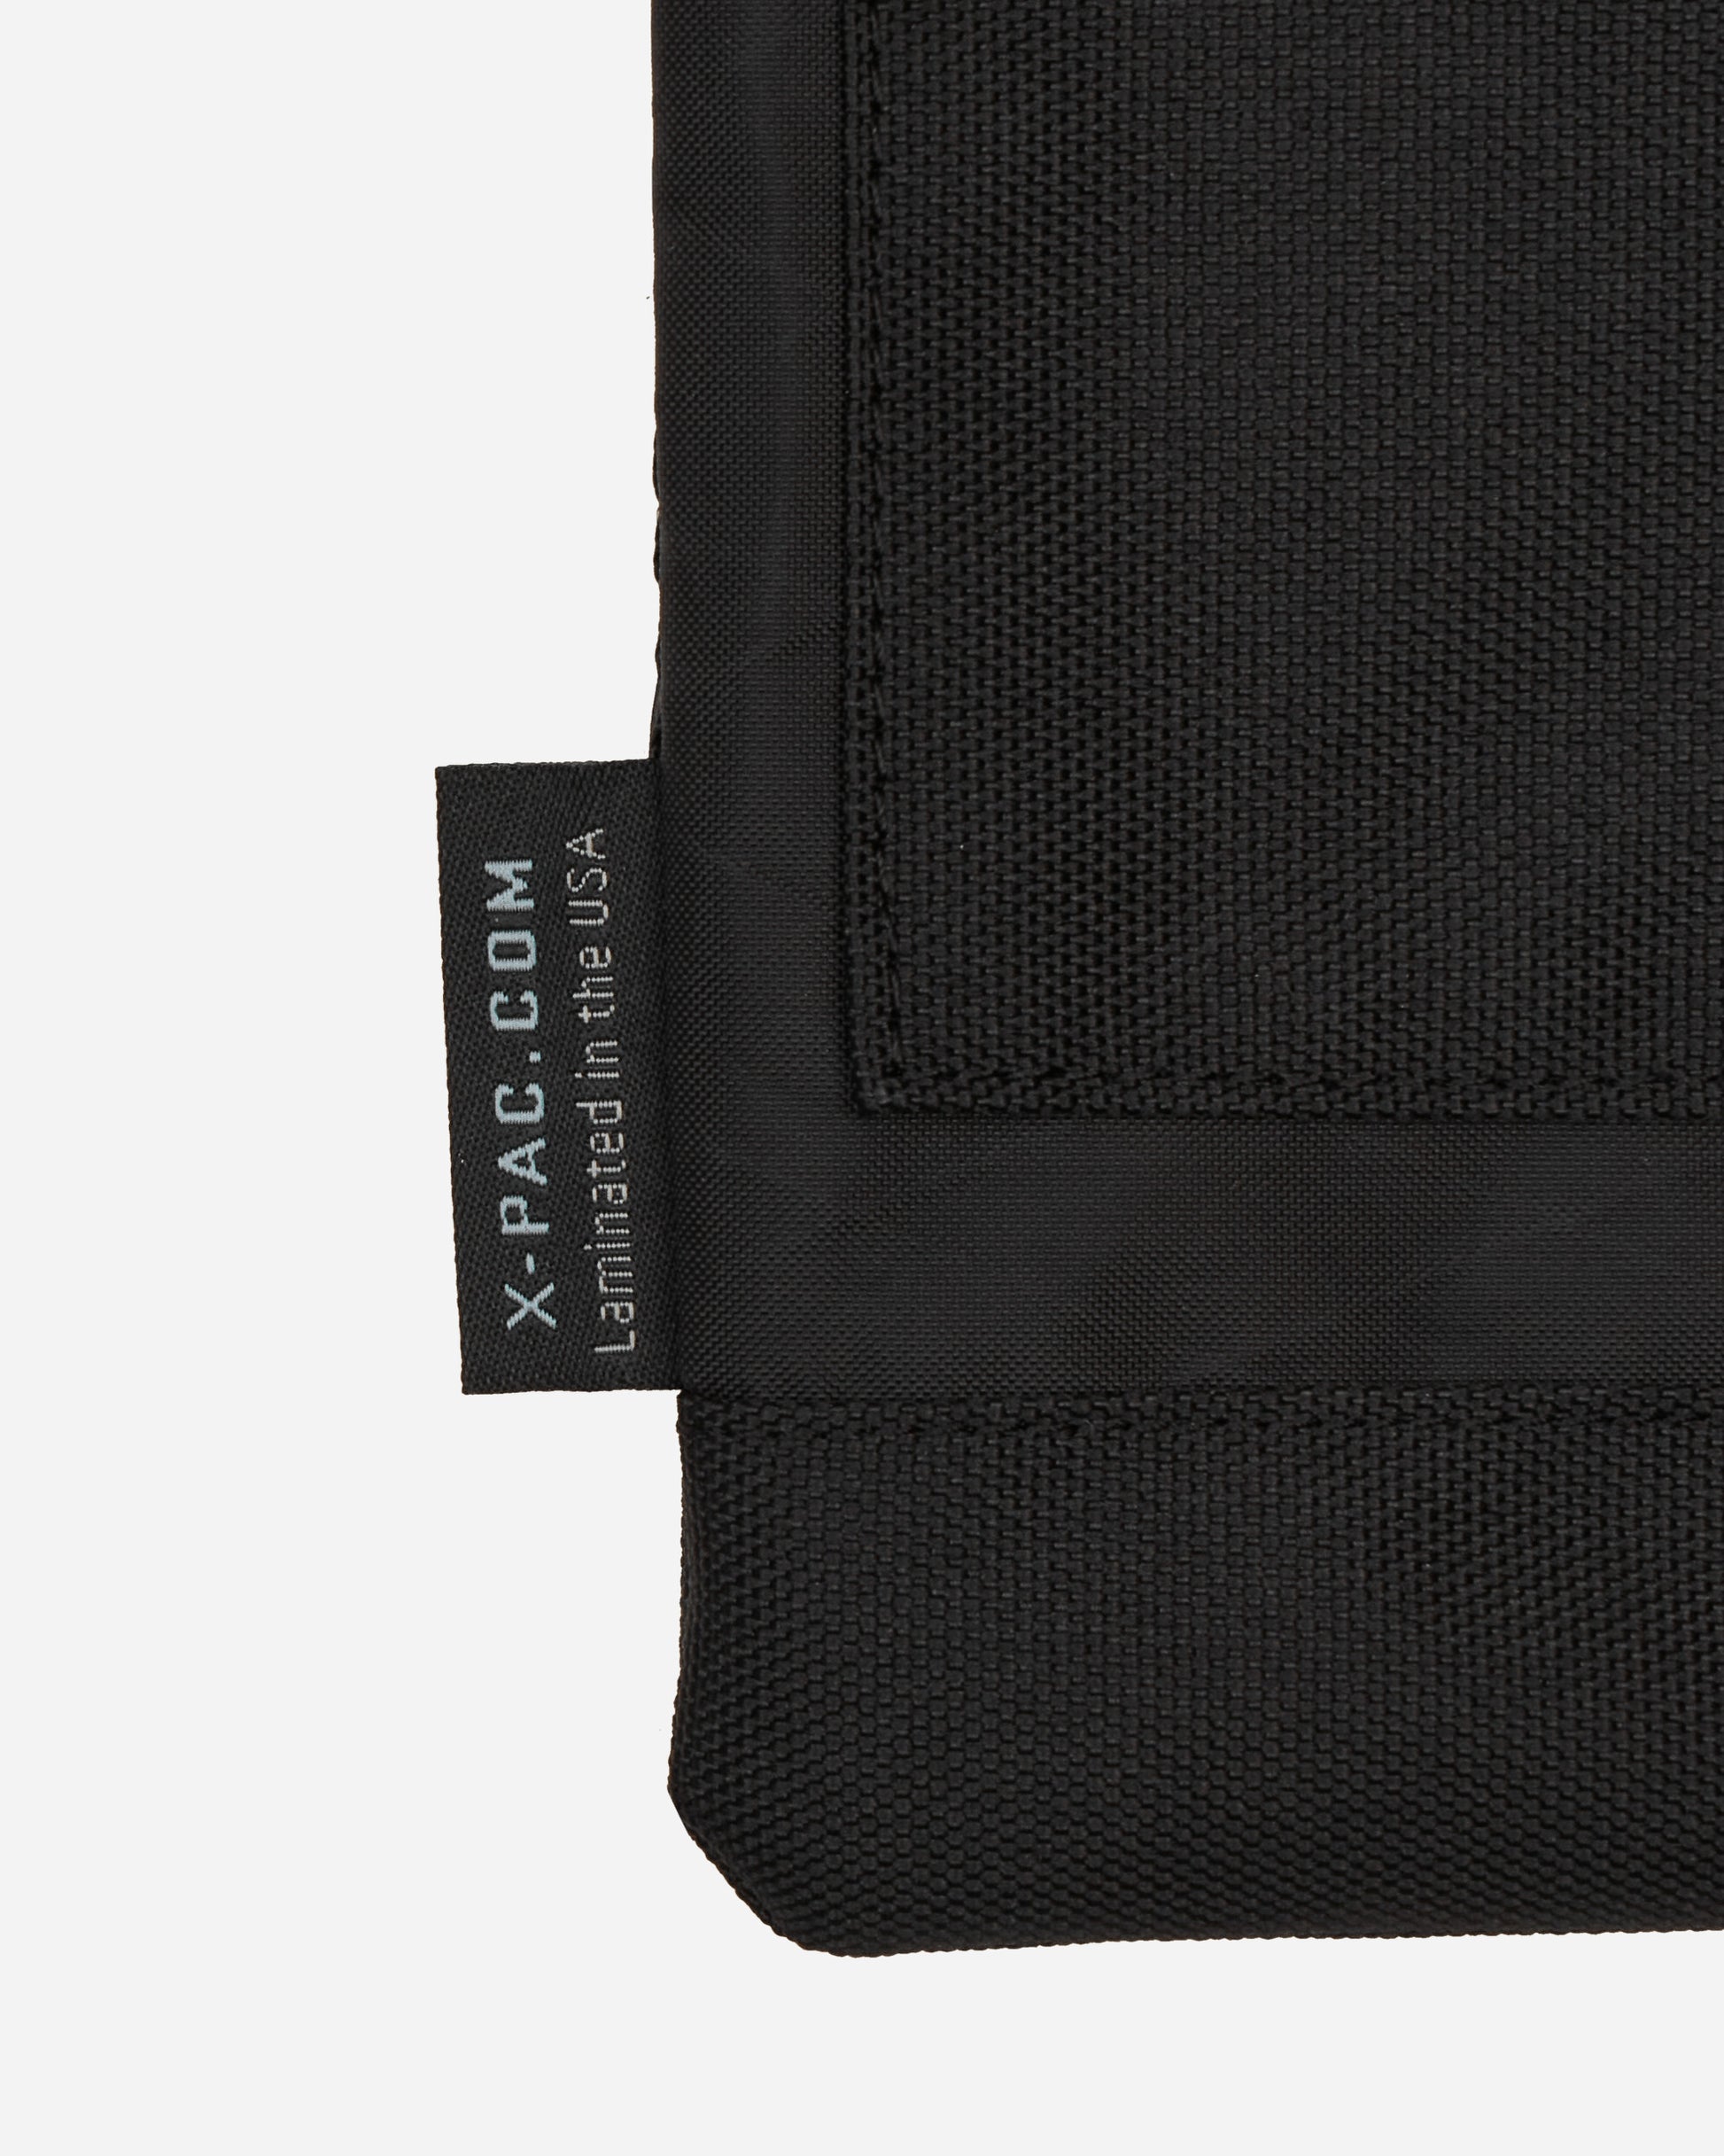 Wild Things New X-Pac Sachosh Black Bags and Backpacks Shoulder Bags WT232-28 BLACK